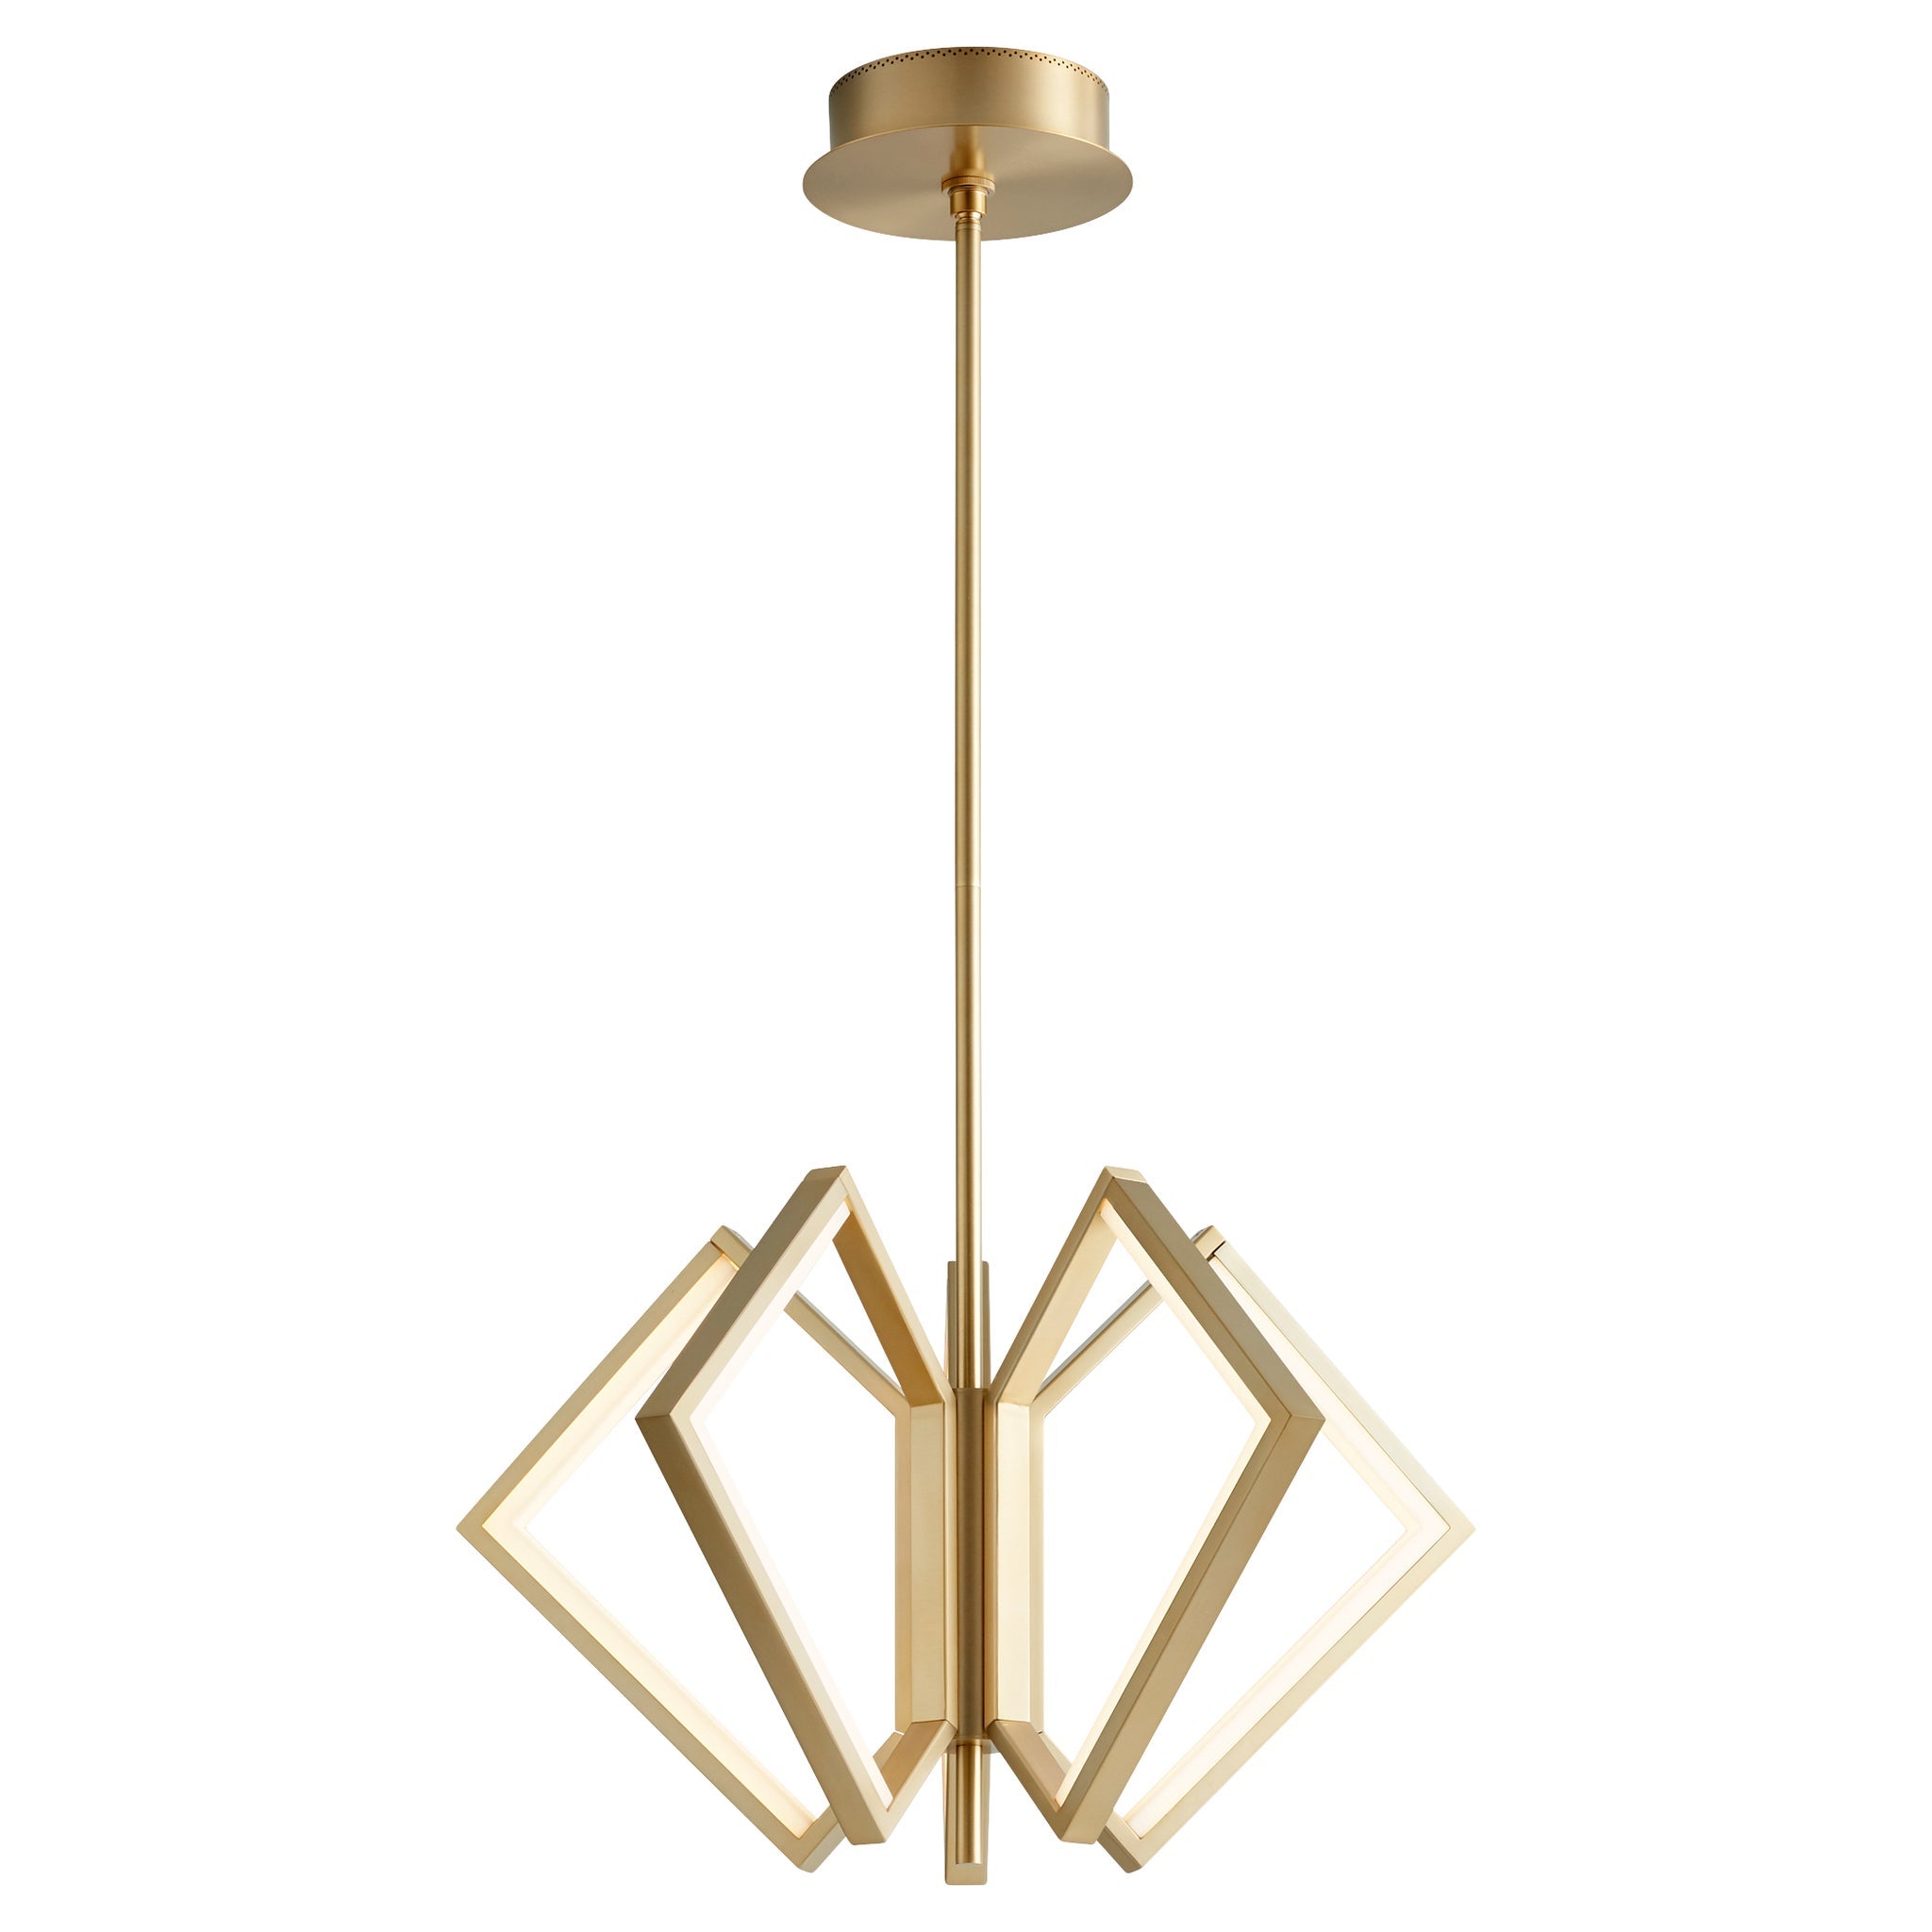 Oxygen ACADIA 3-6142-40 Contemporary Modern LED Chandelier Light - Aged Brass